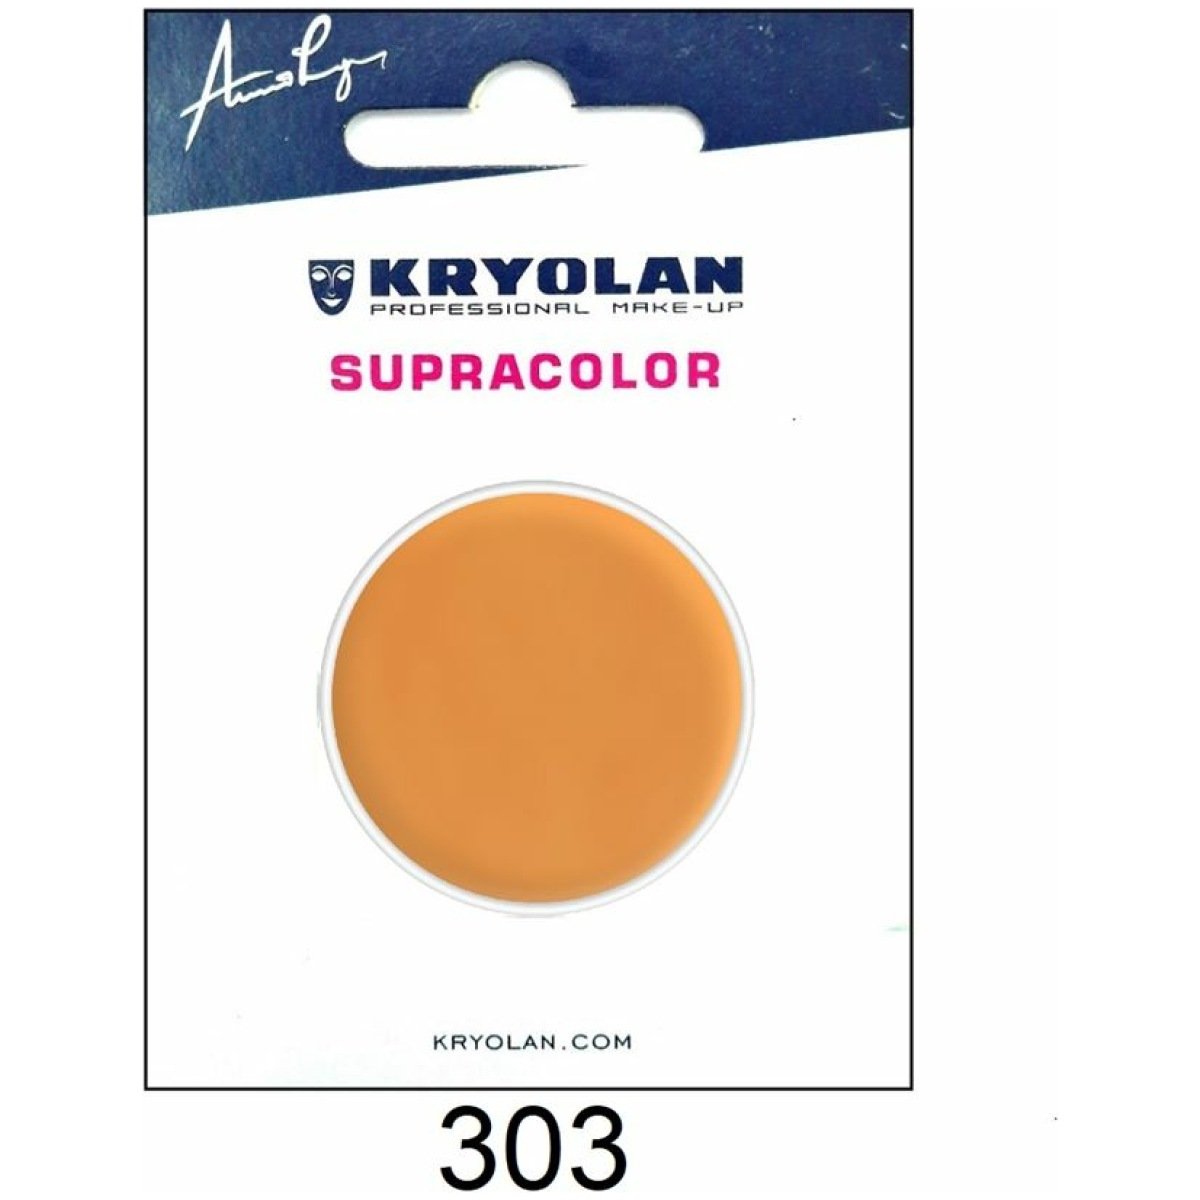 Kryolan Supracolor Foundation 303 4ml